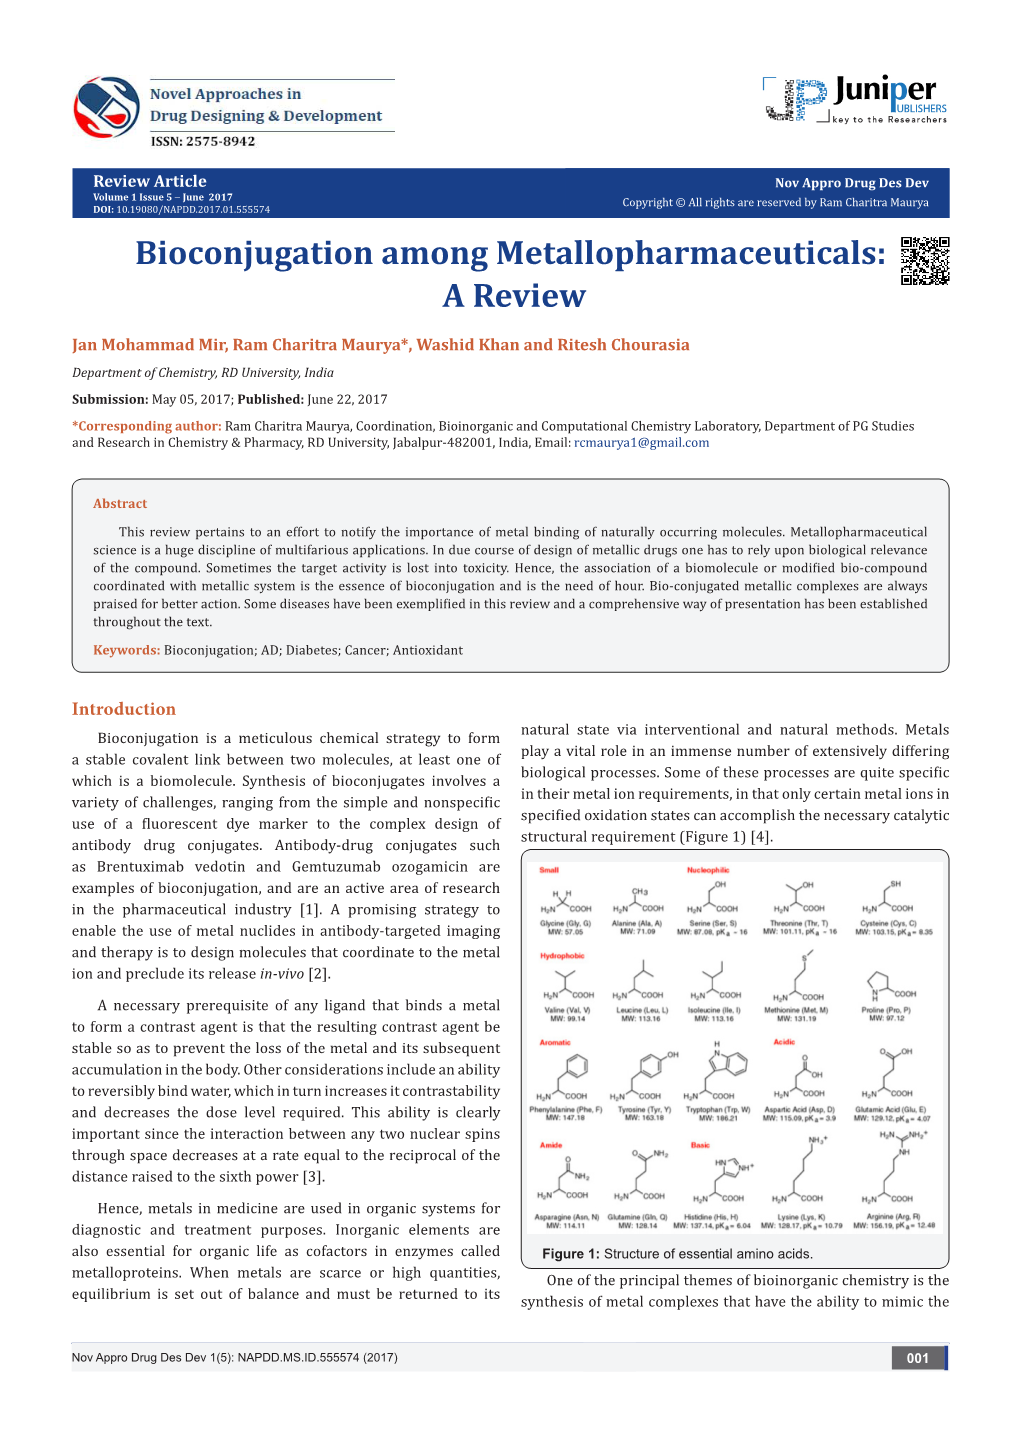 Bioconjugation Among Metallopharmaceuticals: a Review